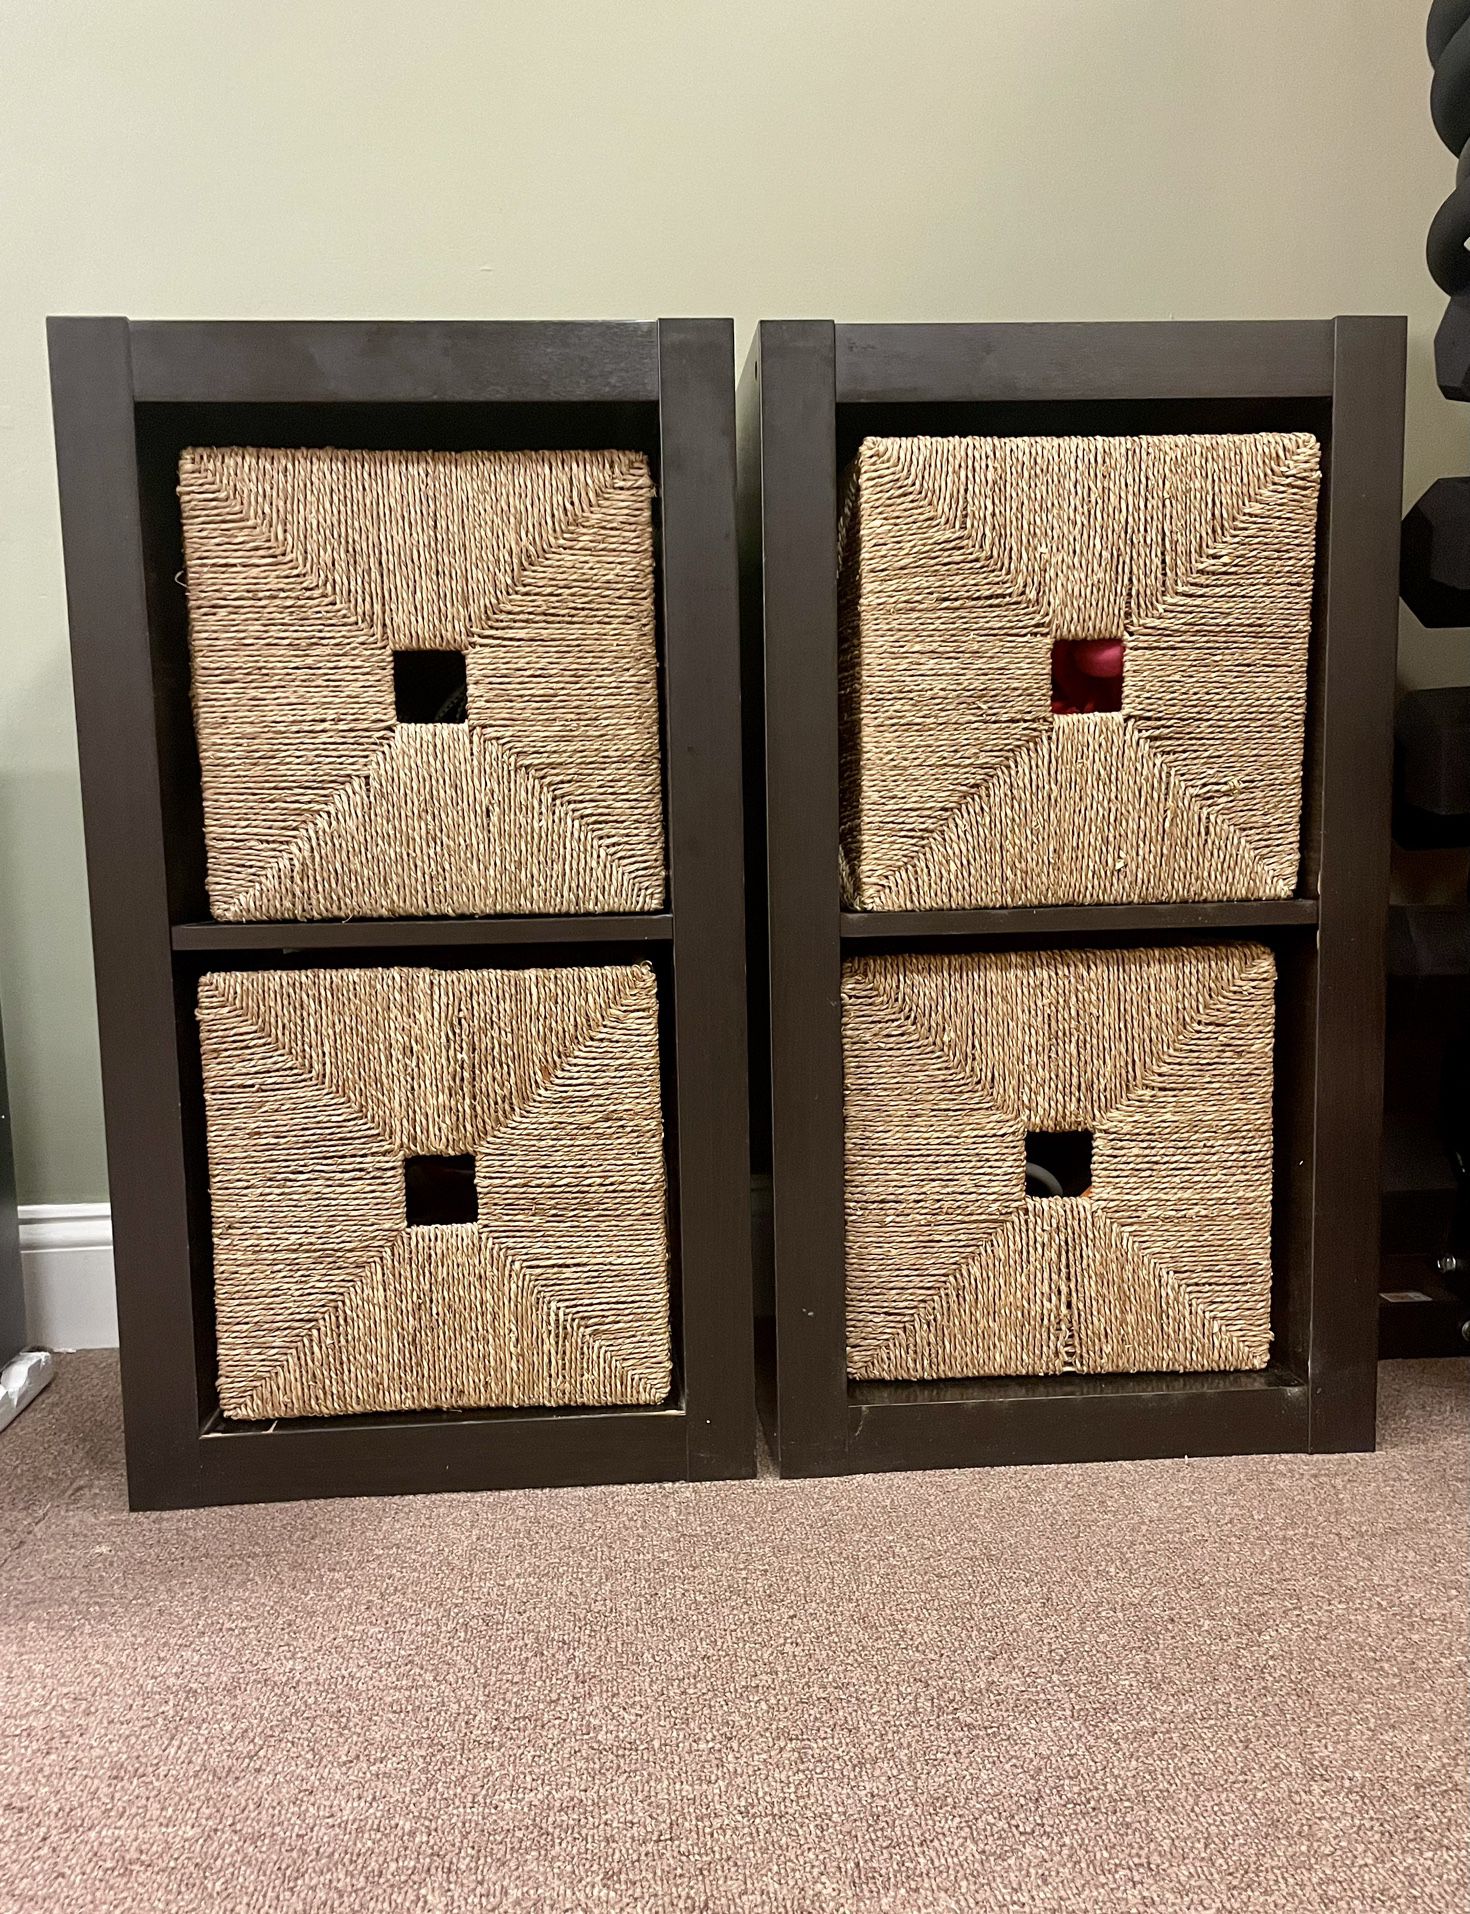 Storage Cube Shelves 